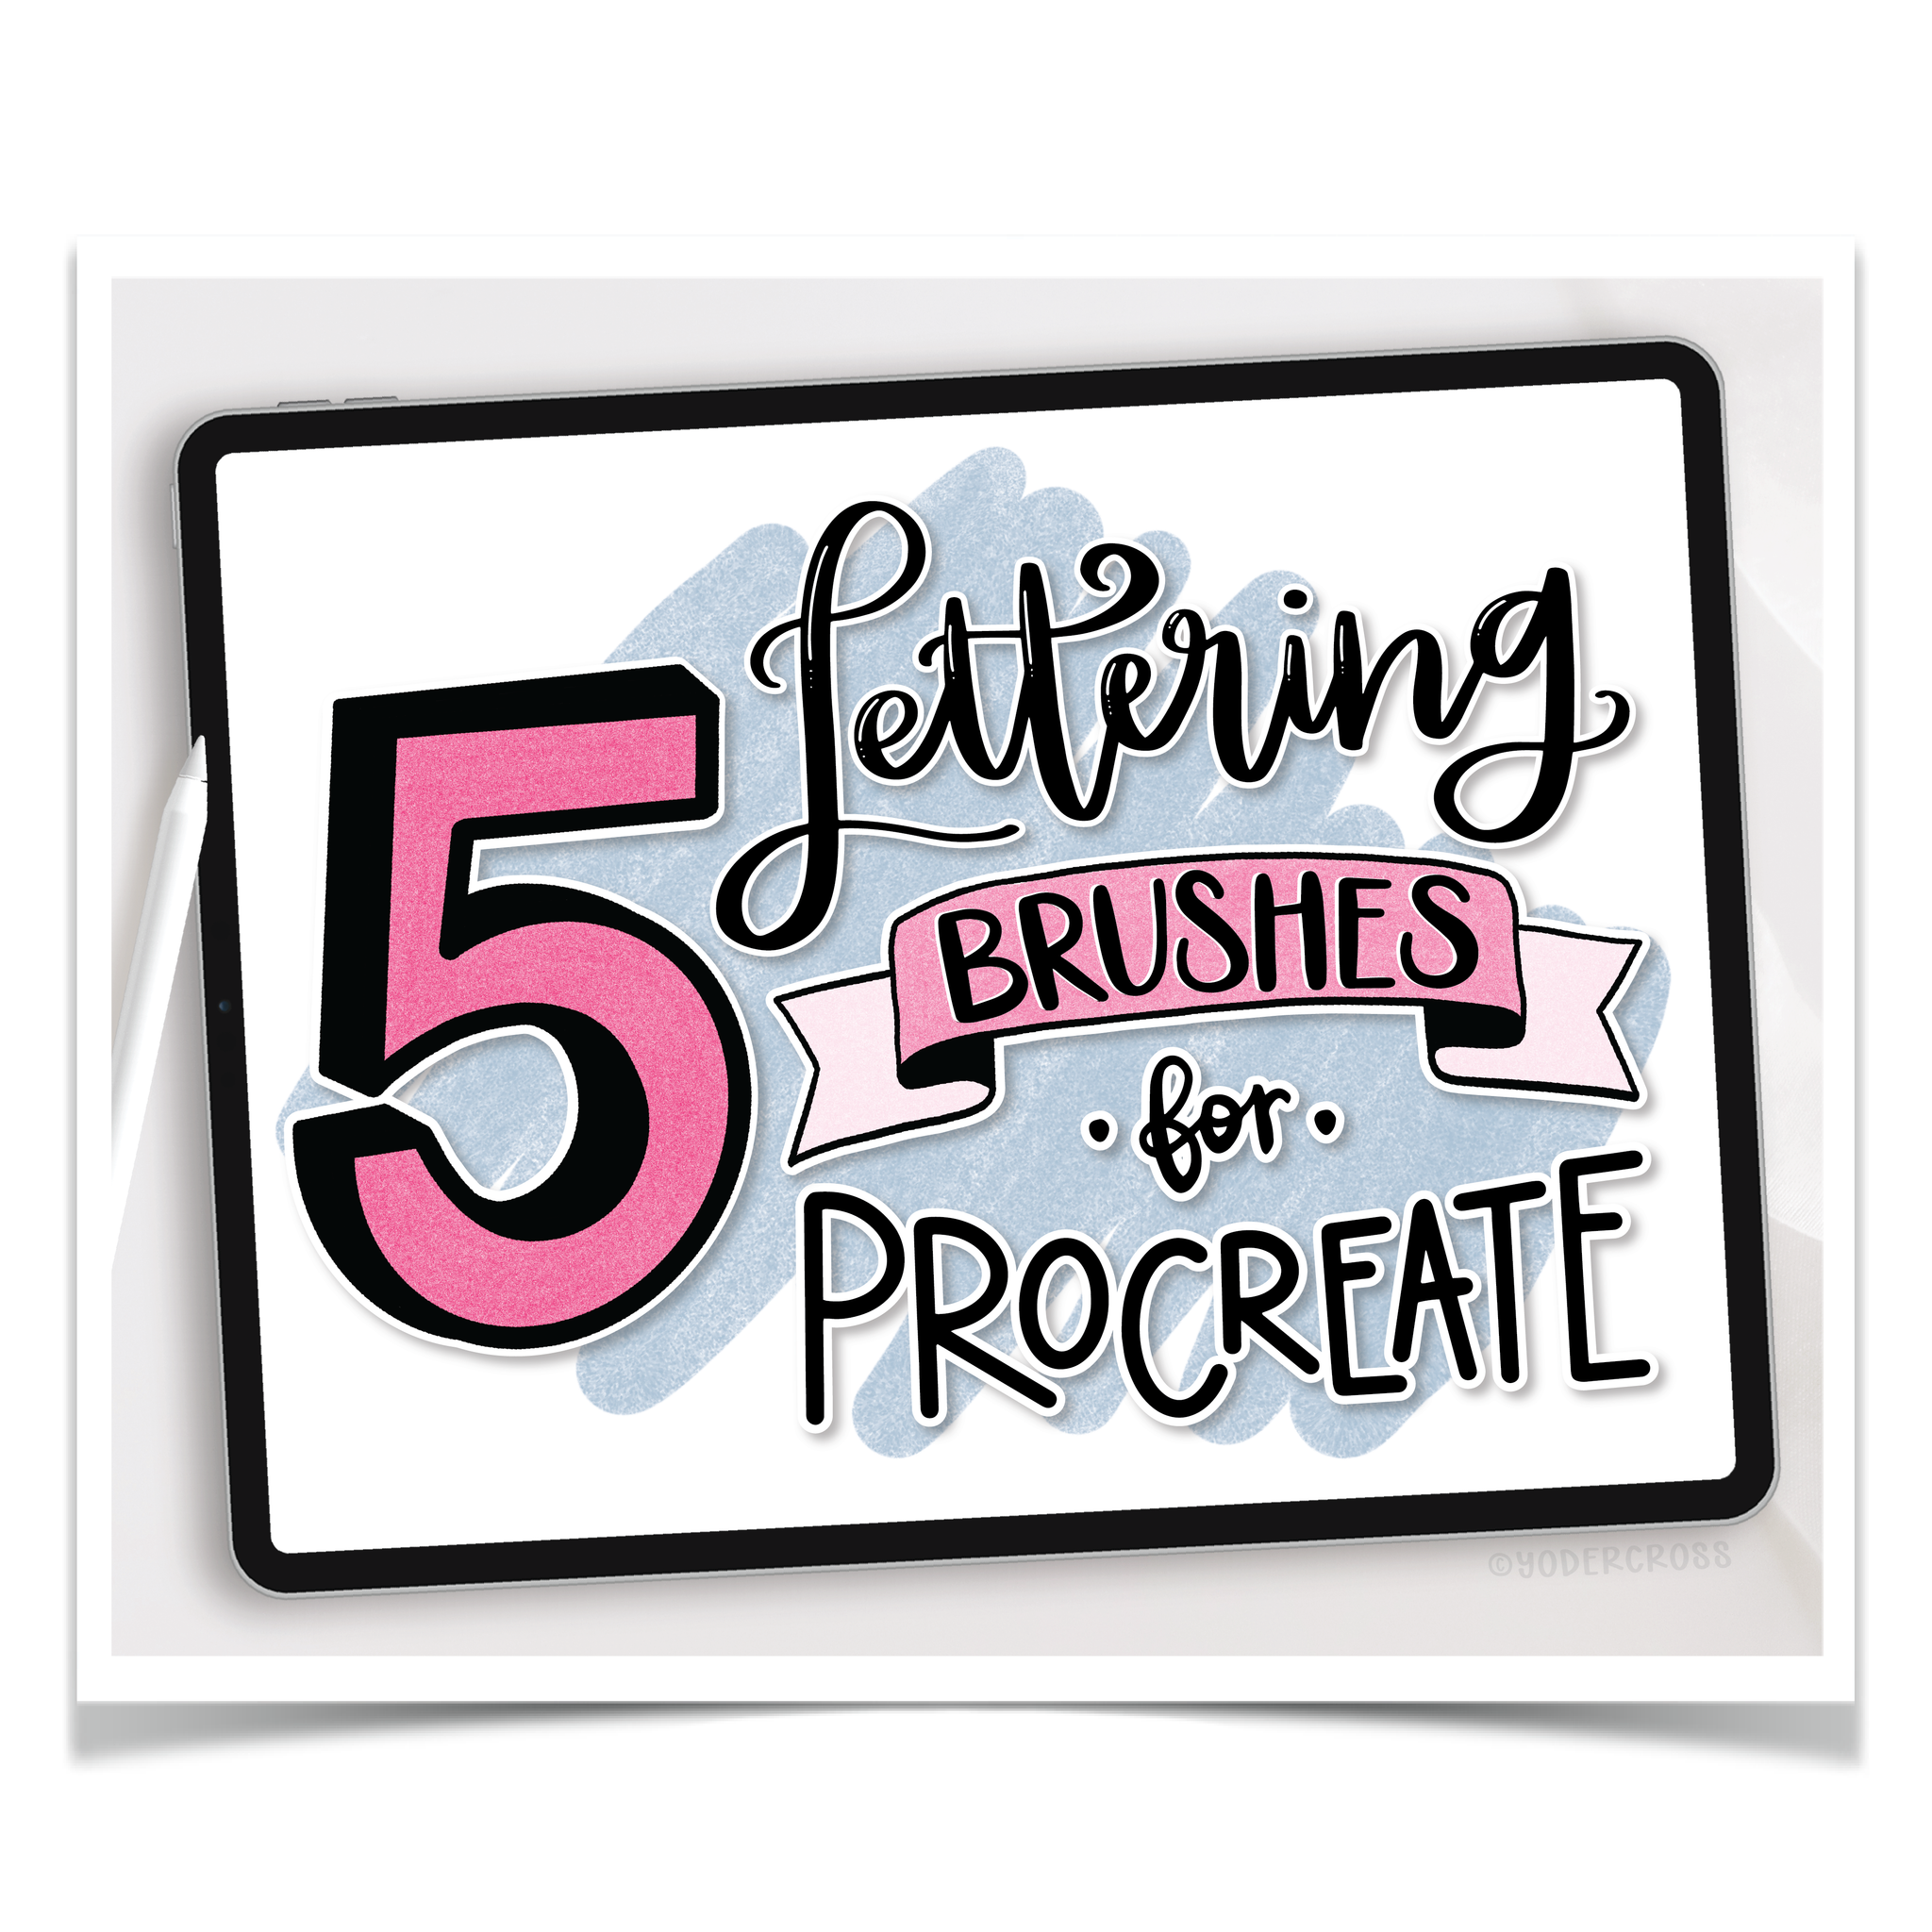 Lettering Brushes for Procreate